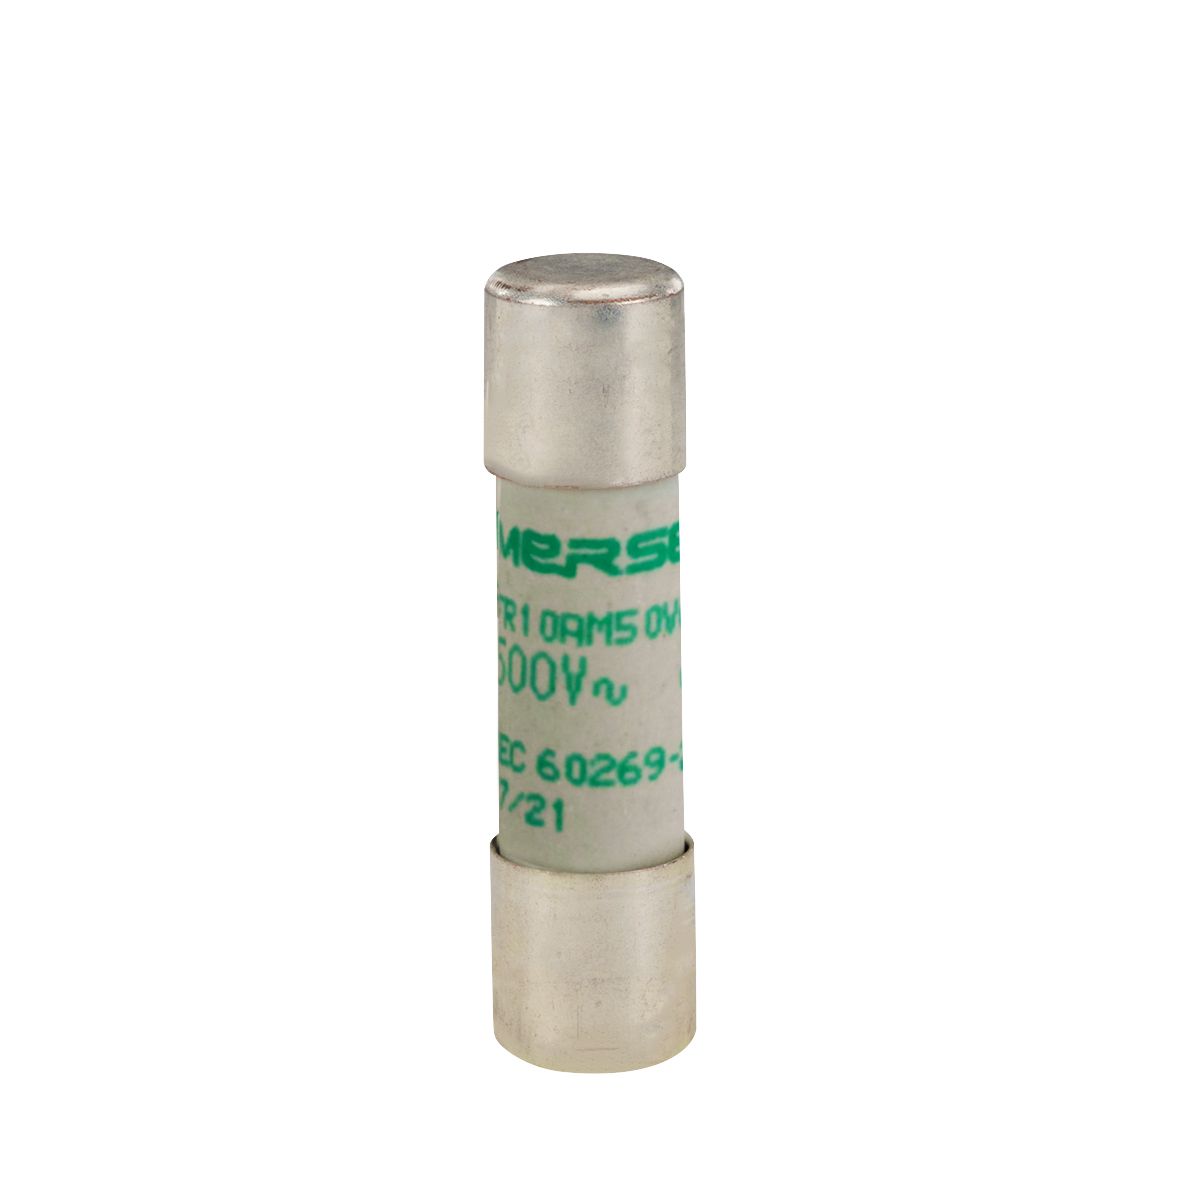 H218714 - Cylindrical fuse-link aM 500VAC 10.3x38, 2A